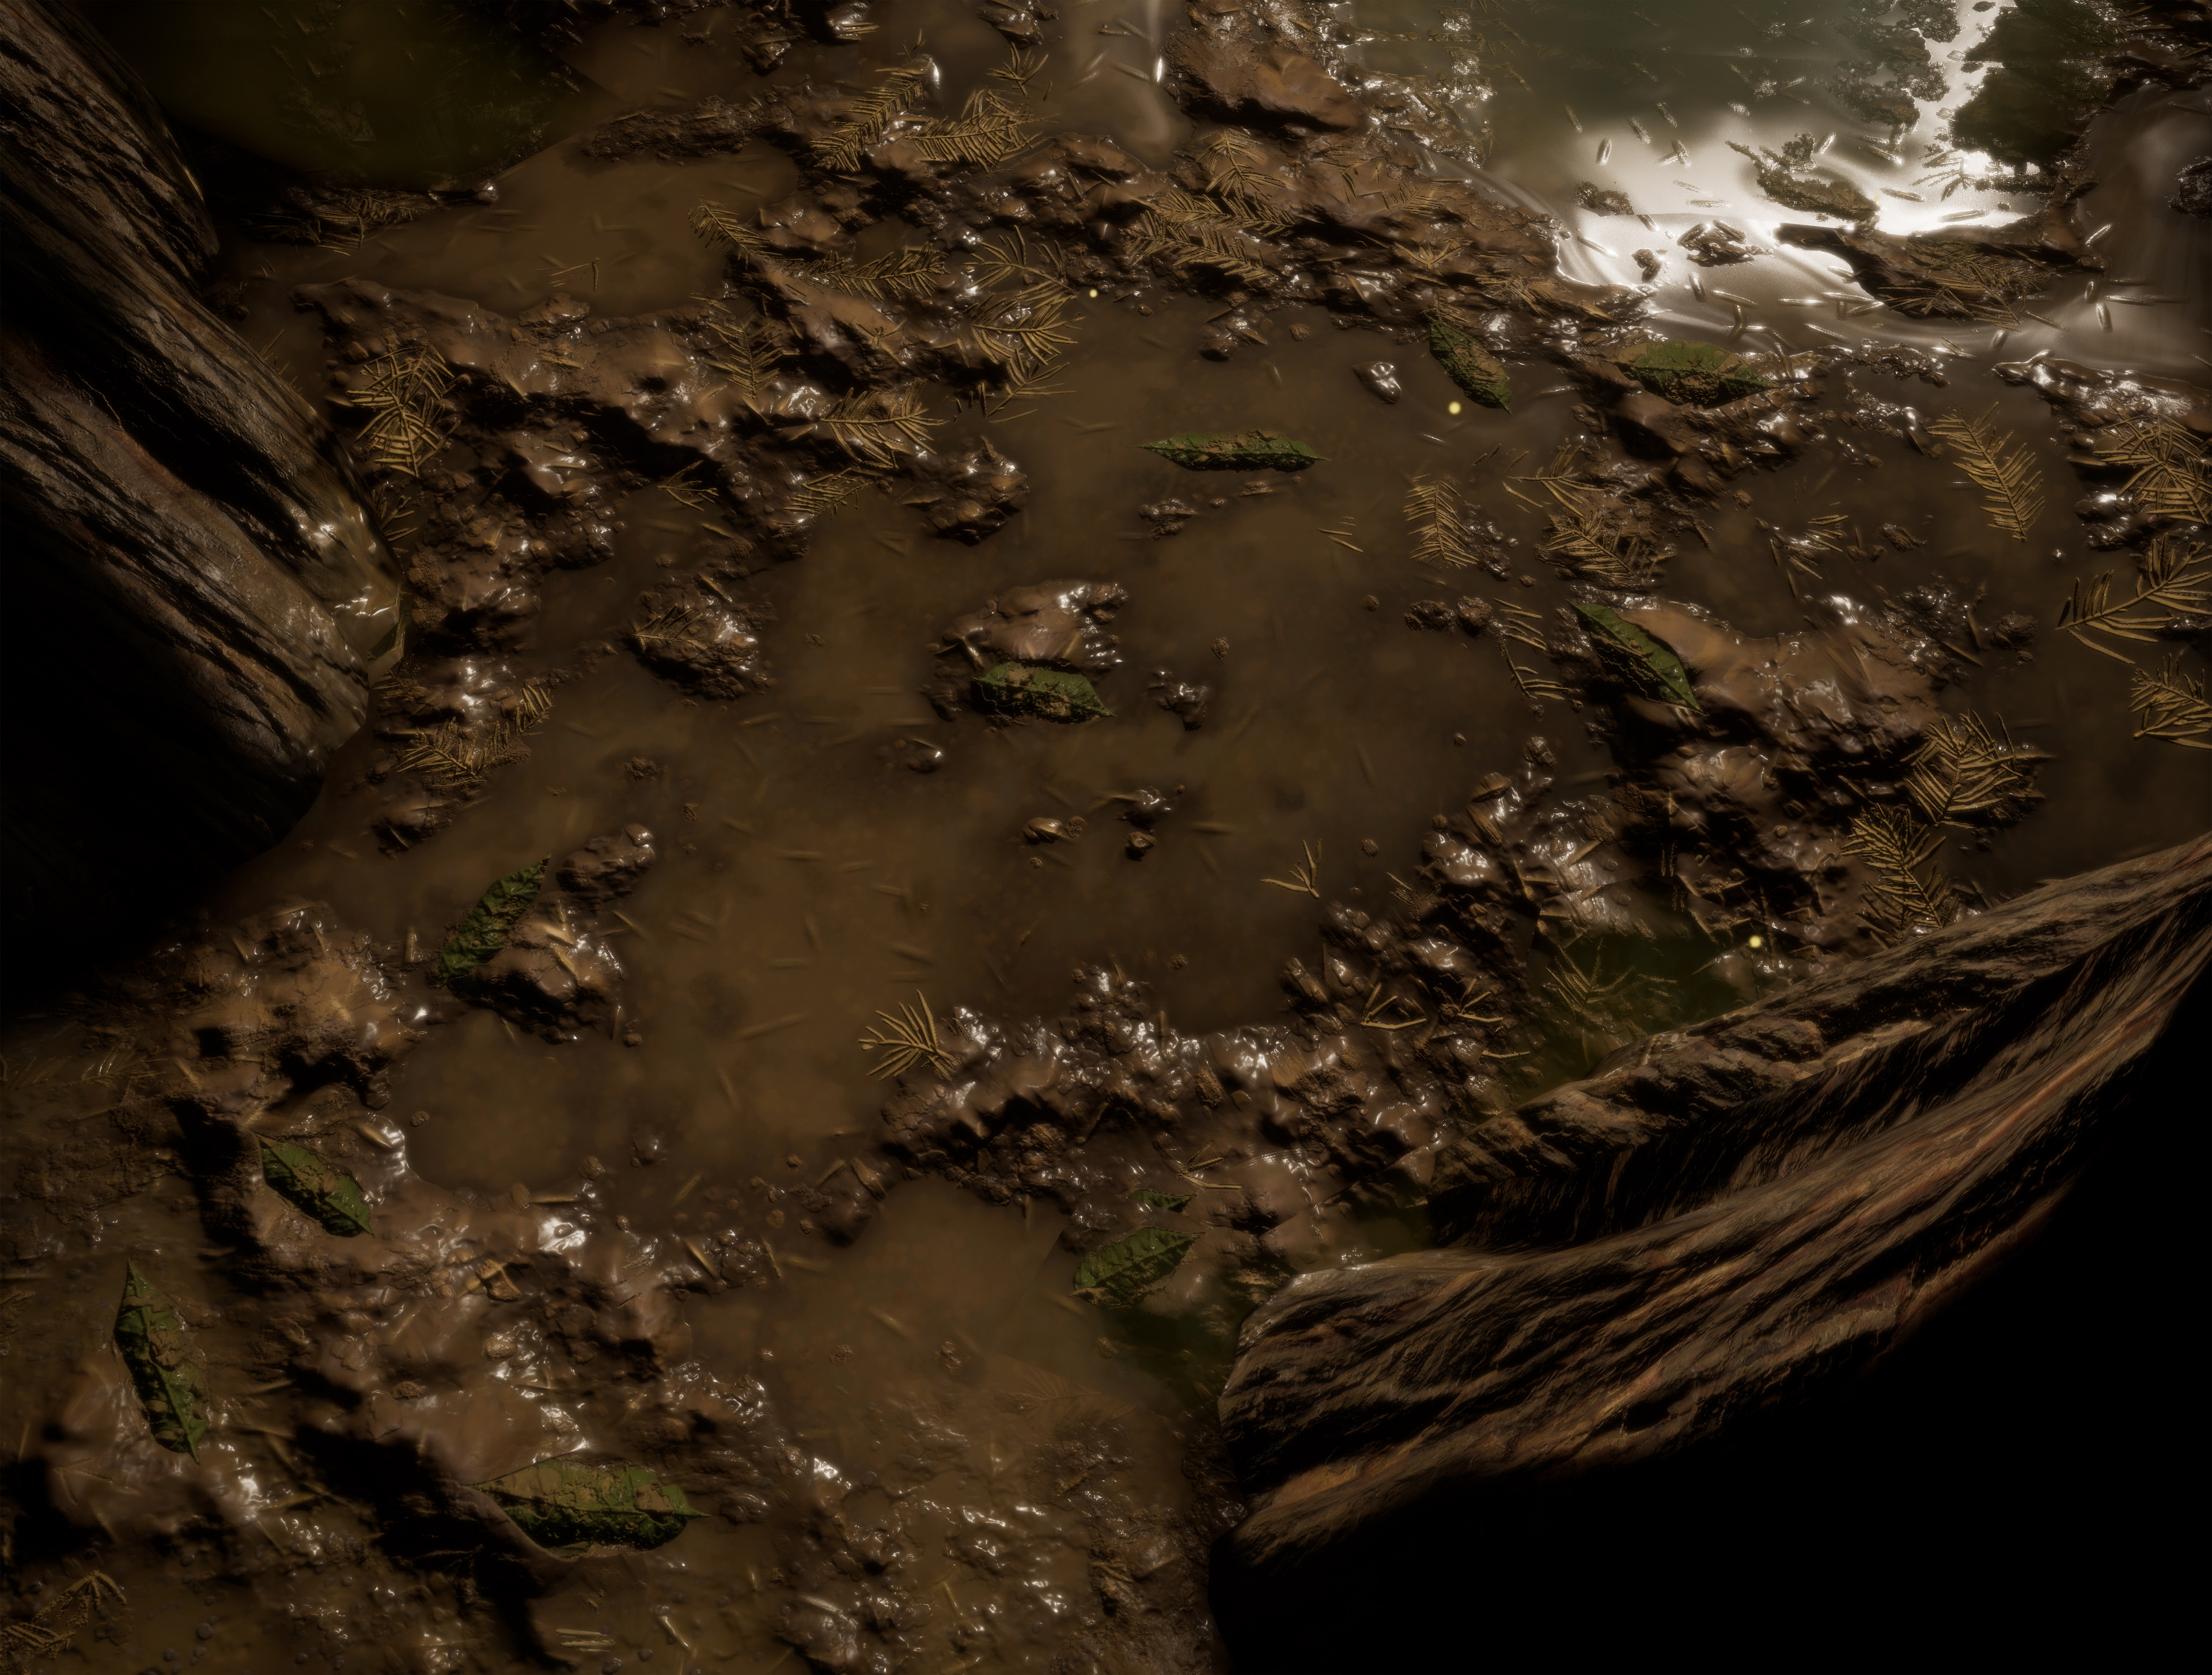 Mud #1, screenshot from the engine